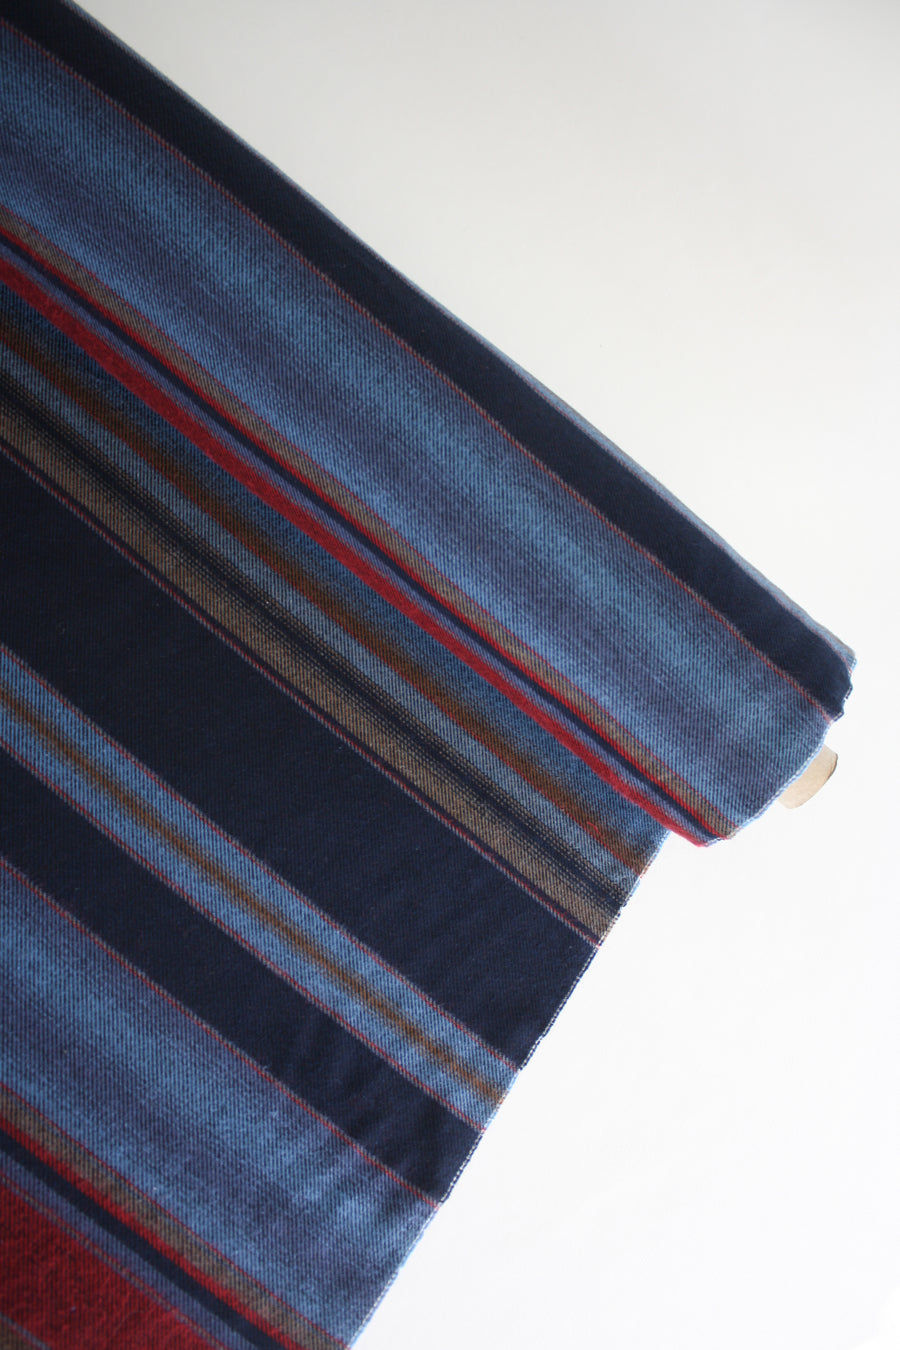 Marcel - Yarn-Dyed French Flannel | Celestial